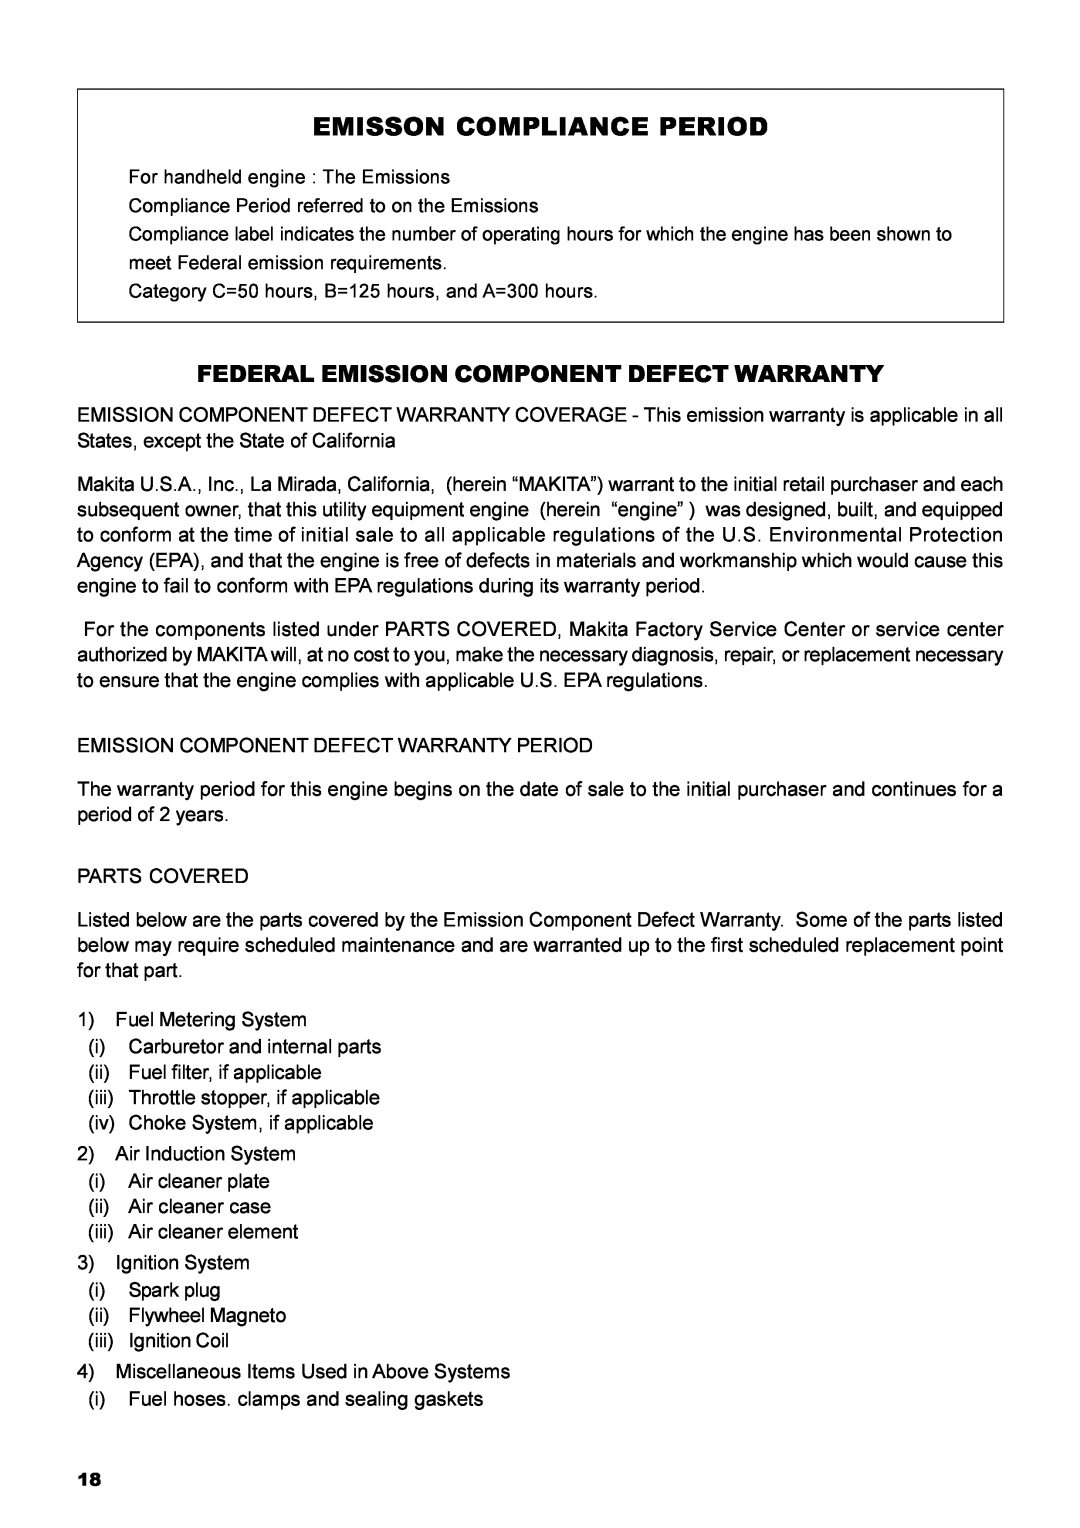 Dolmar MS-22C instruction manual Emisson Compliance Period, Federal Emission Component Defect Warranty 